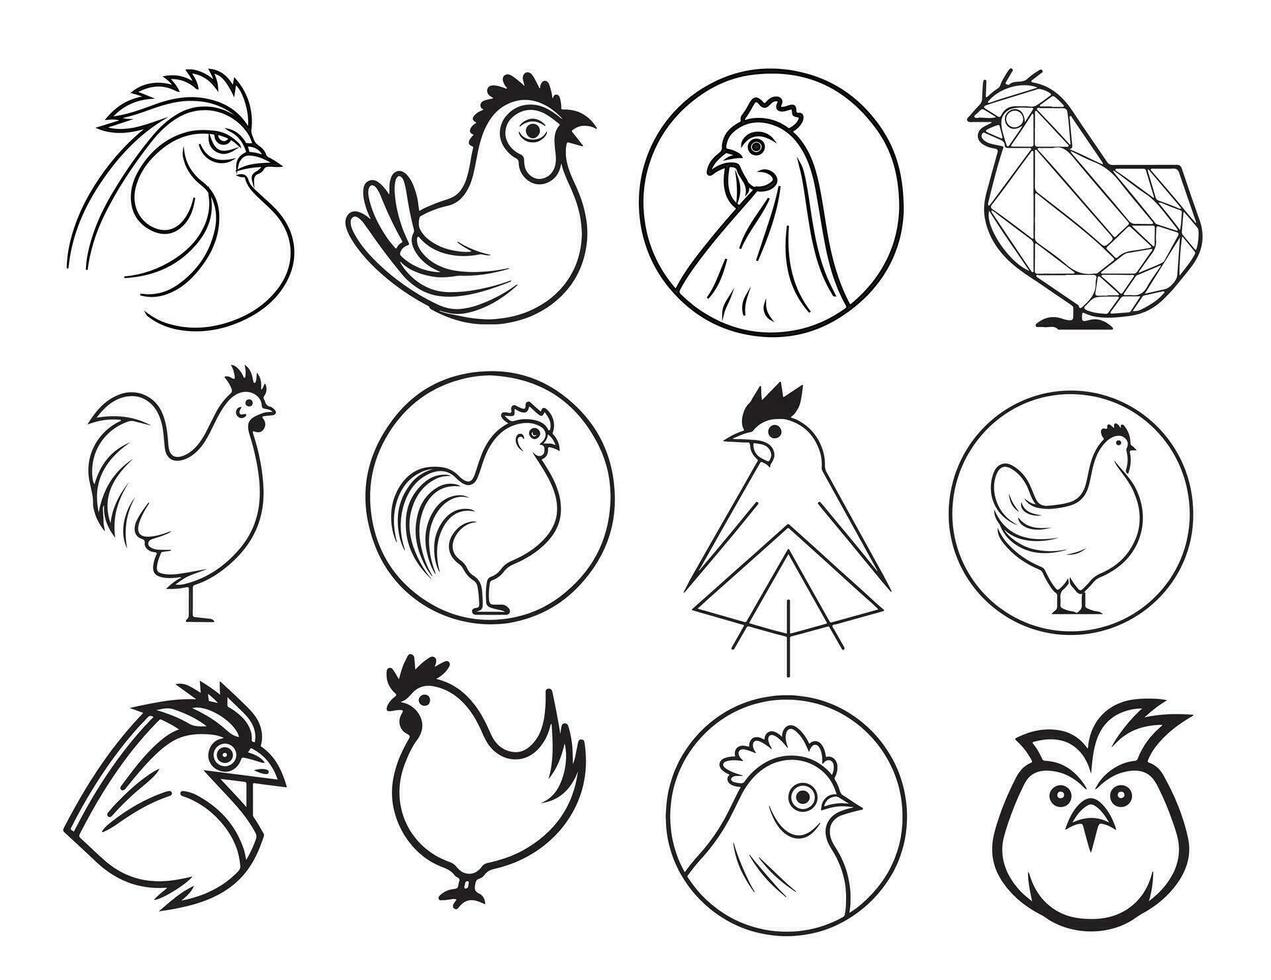 Chicken hen logo set sketch hand drawn Vector illustration